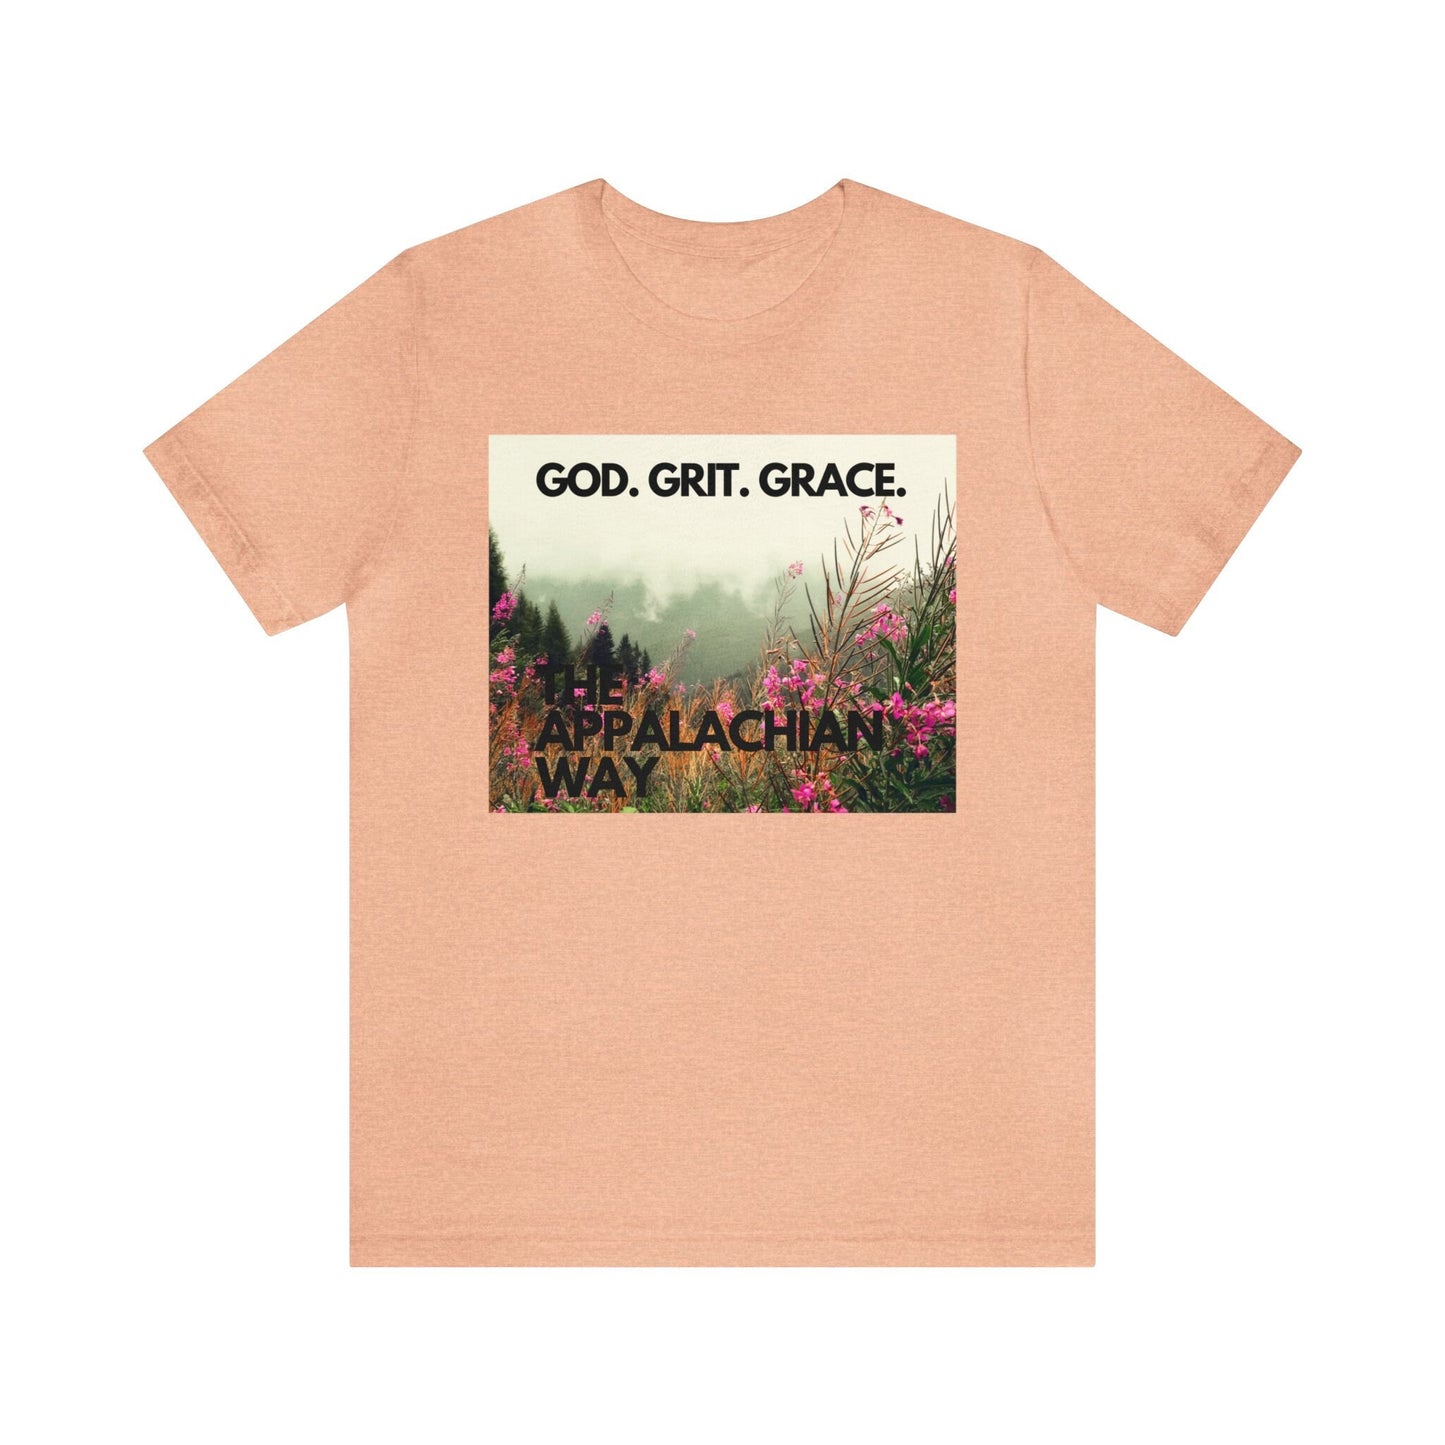 The Appalachian Way God Grit Grace Graphic T-shirt